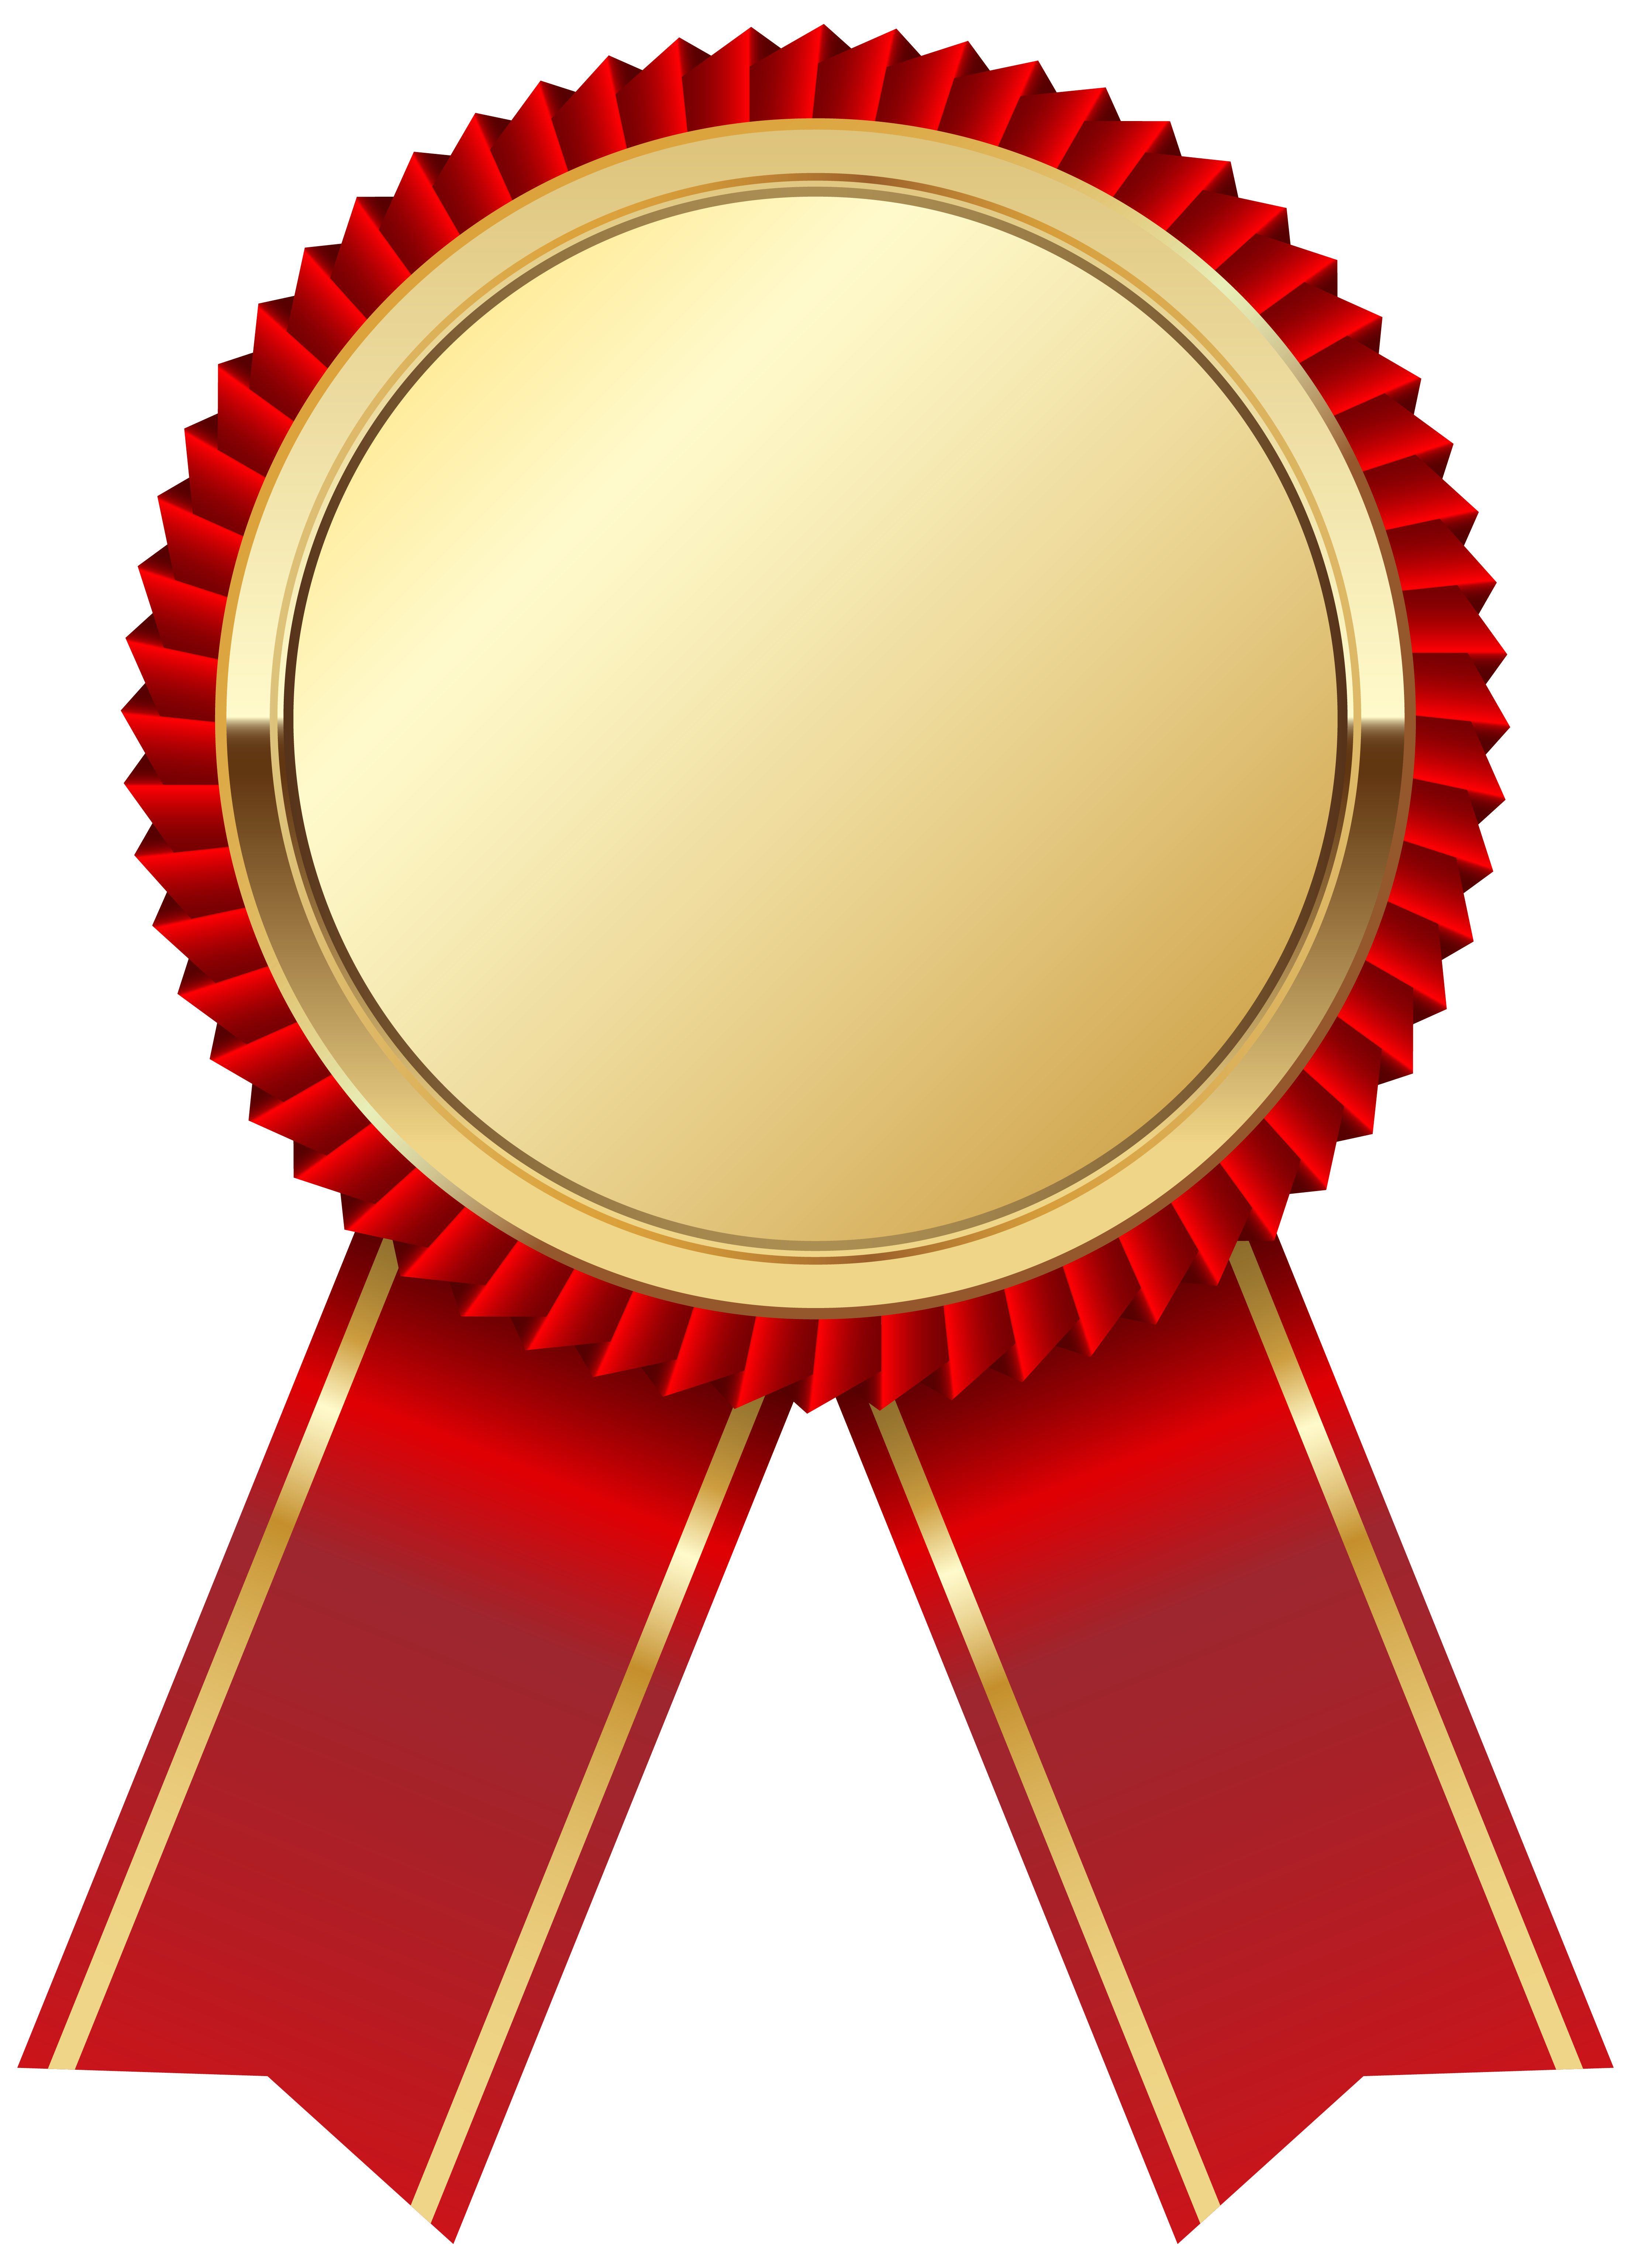 Gold Medal Clipart - Tumundografico